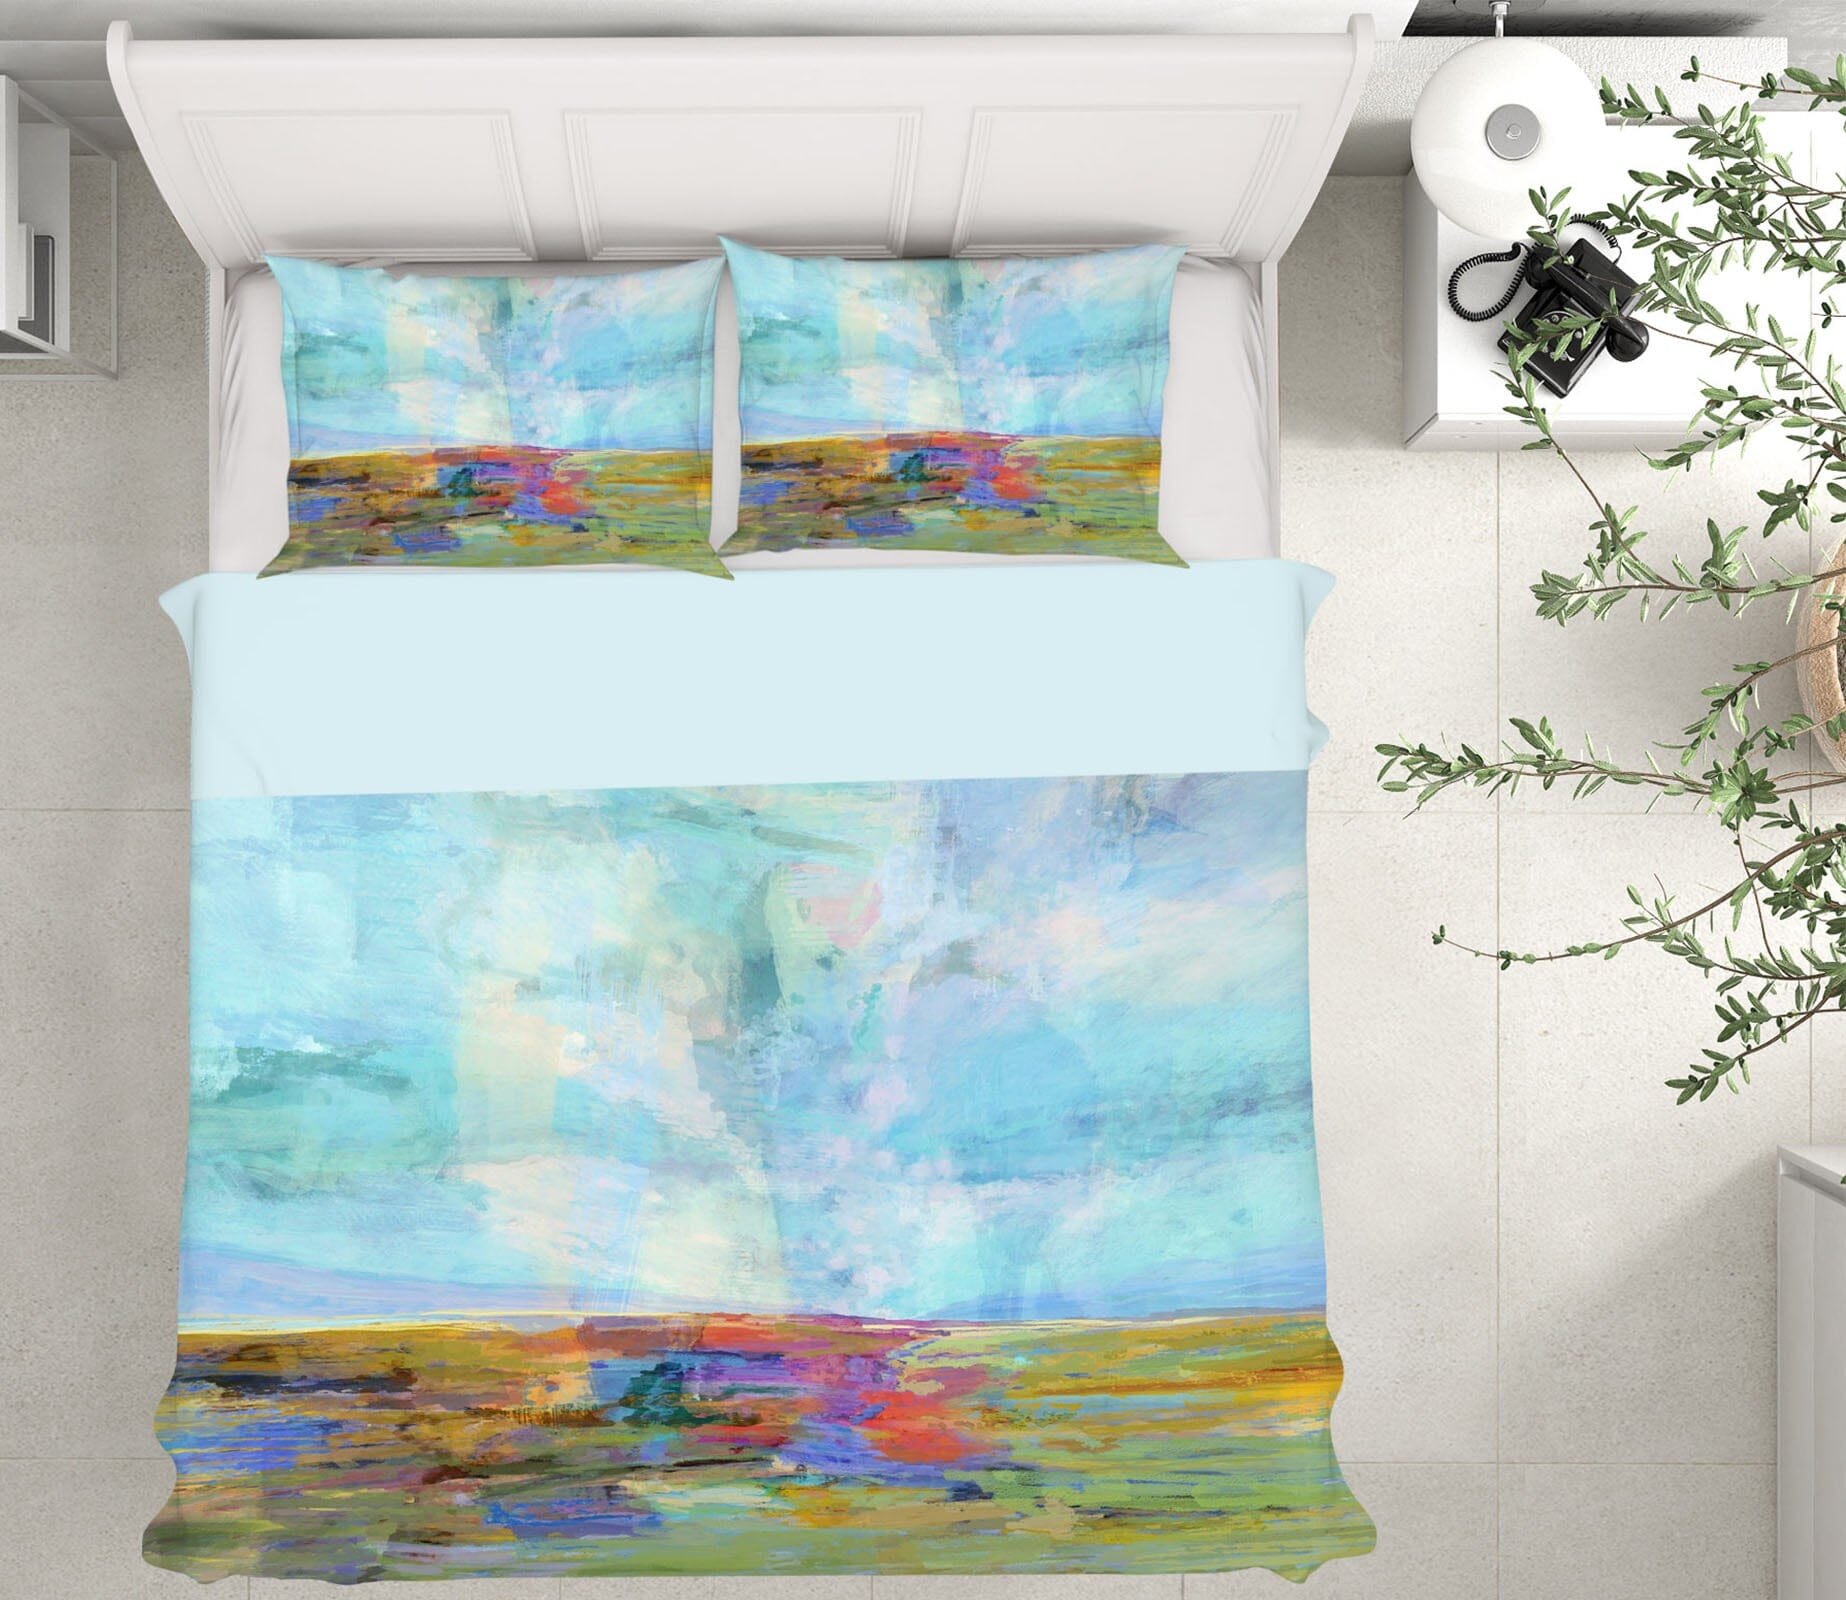 3D Prairie 2118 Michael Tienhaara Bedding Bed Pillowcases Quilt Quiet Covers AJ Creativity Home 